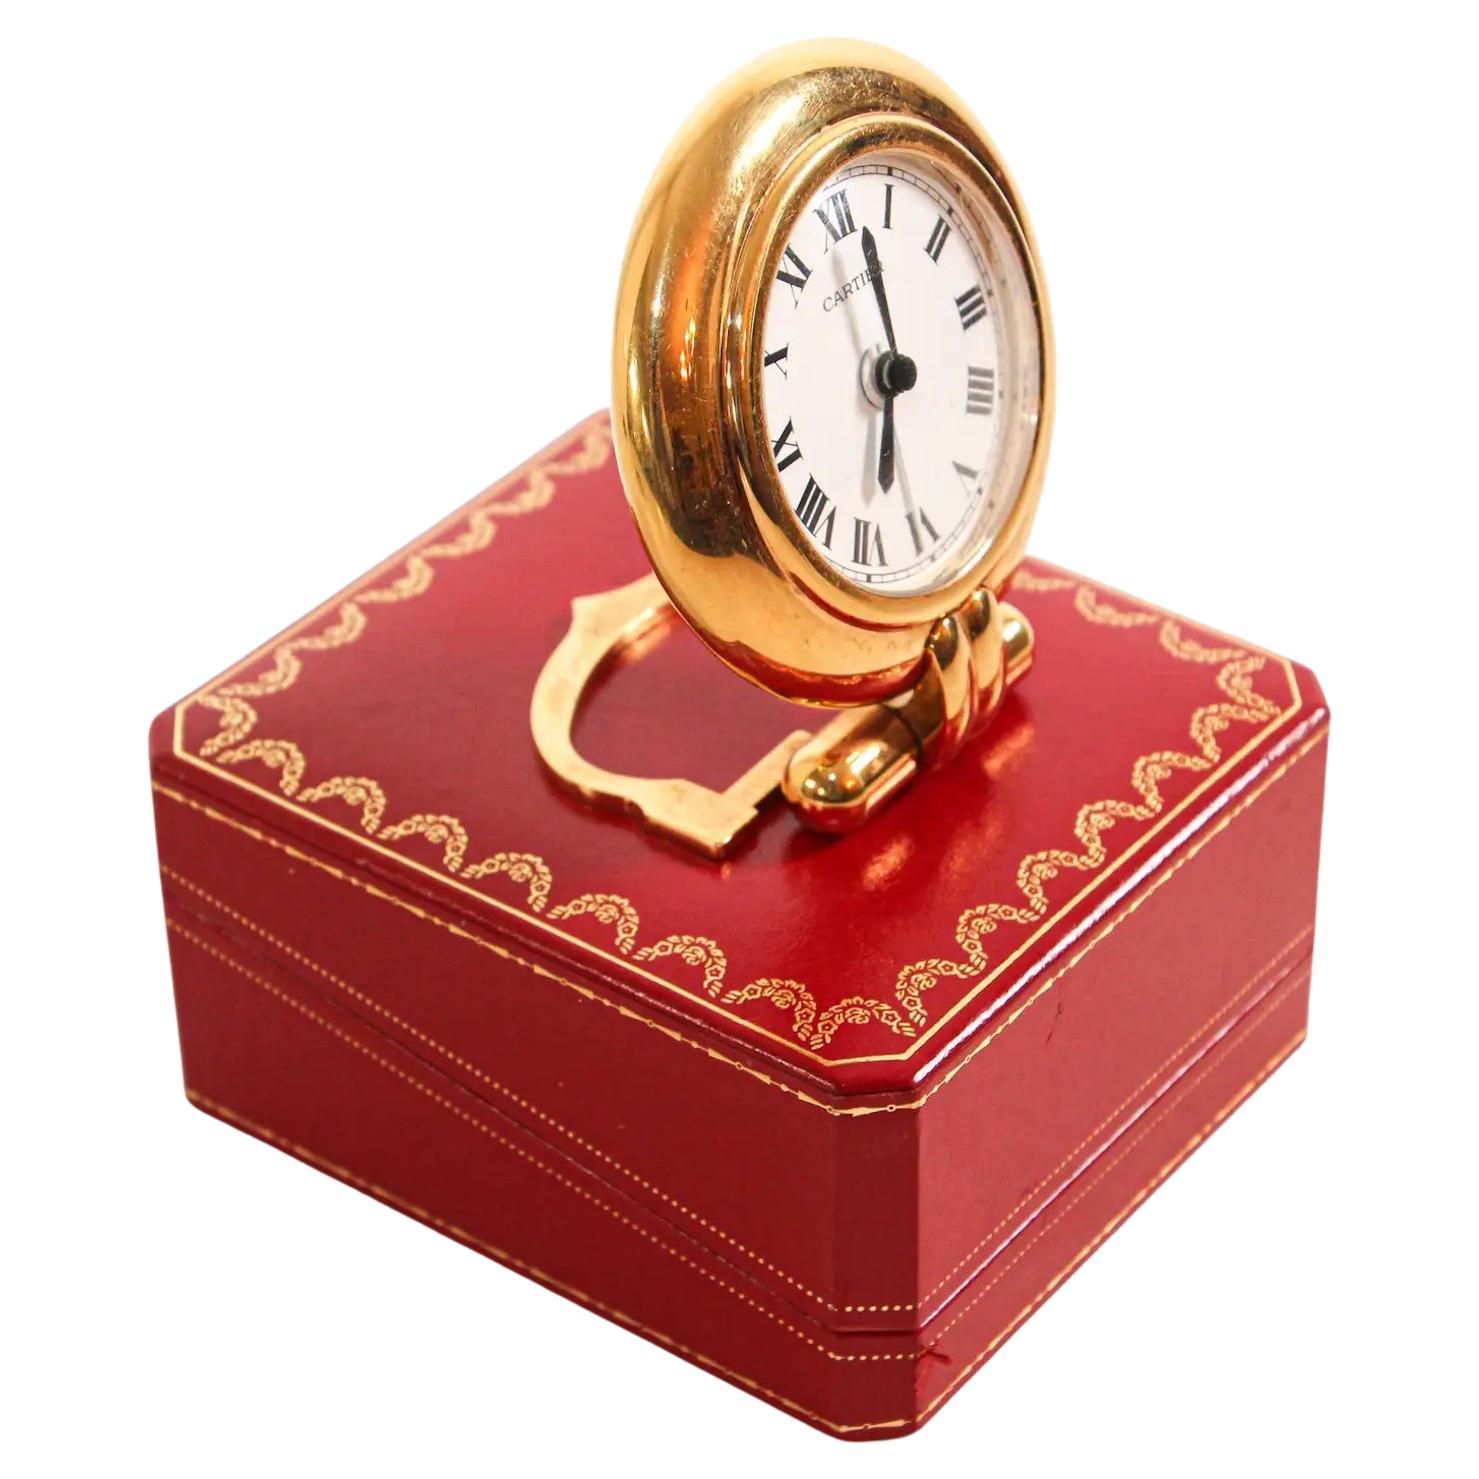 Cartier Colisee Art Deco Travel Desk Clock 24-Karat Gold-Plated